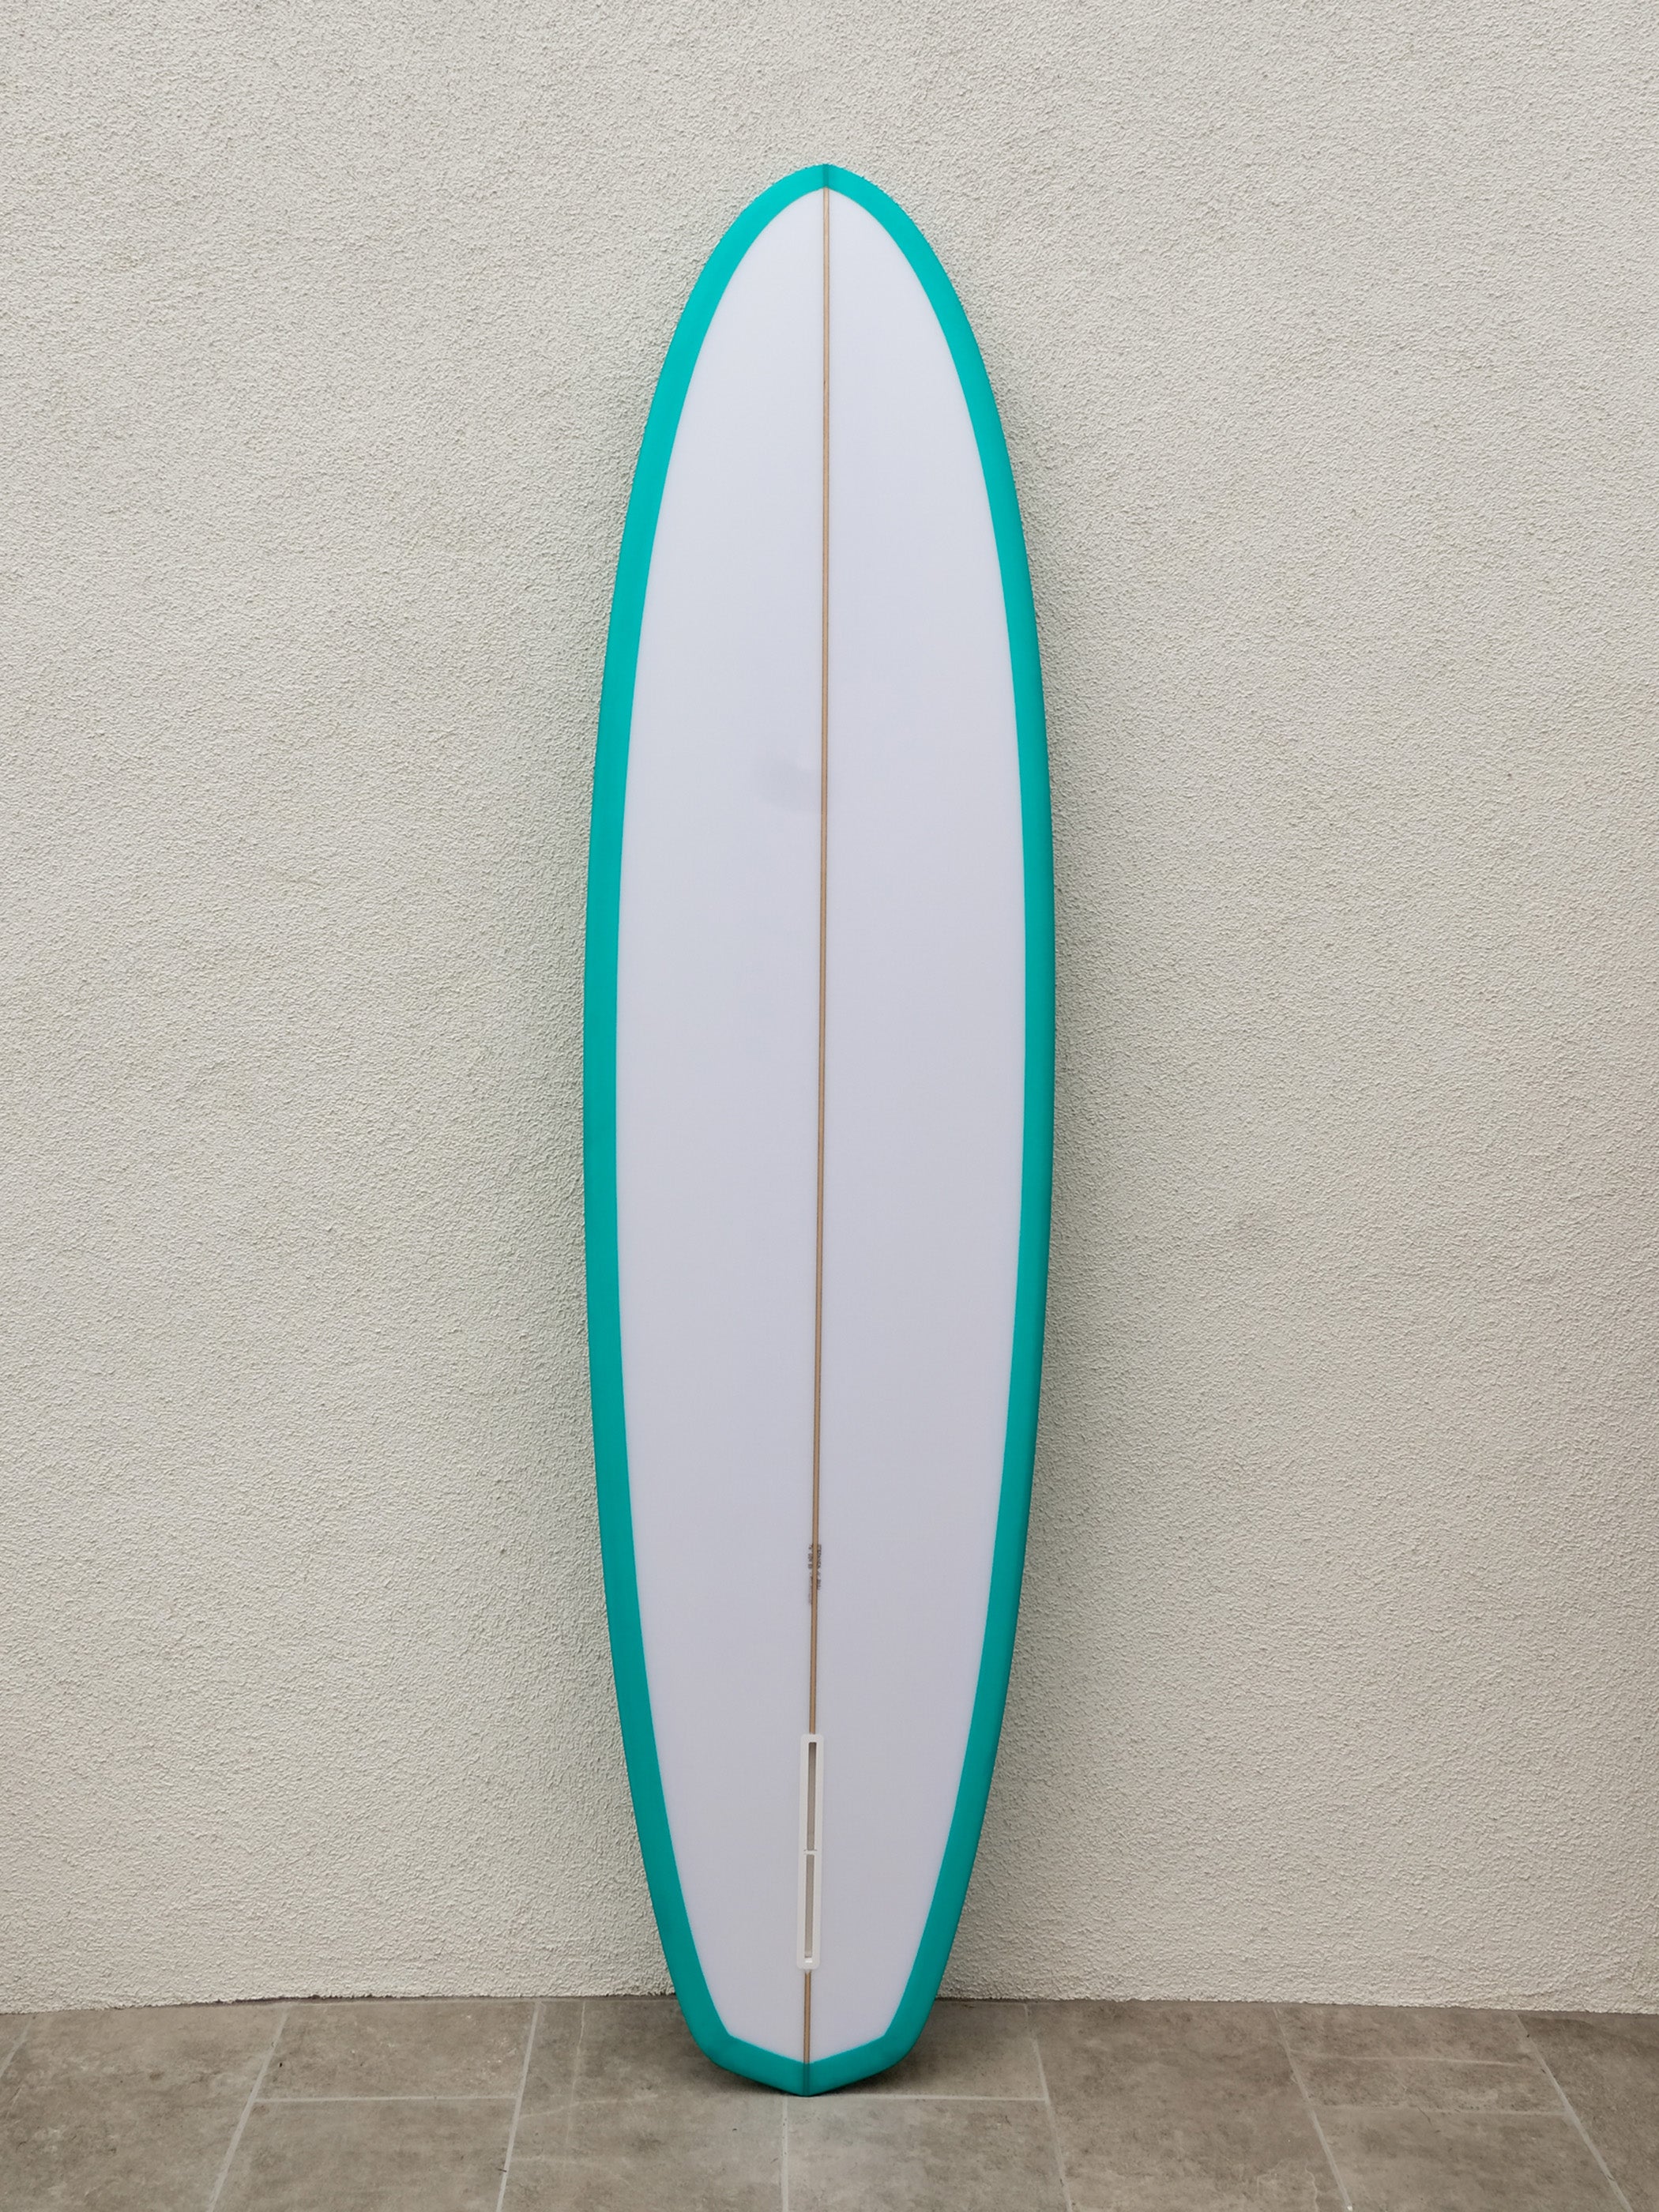 STPNK | Gen Ed 7’6” Turquoise Blue Surfboard